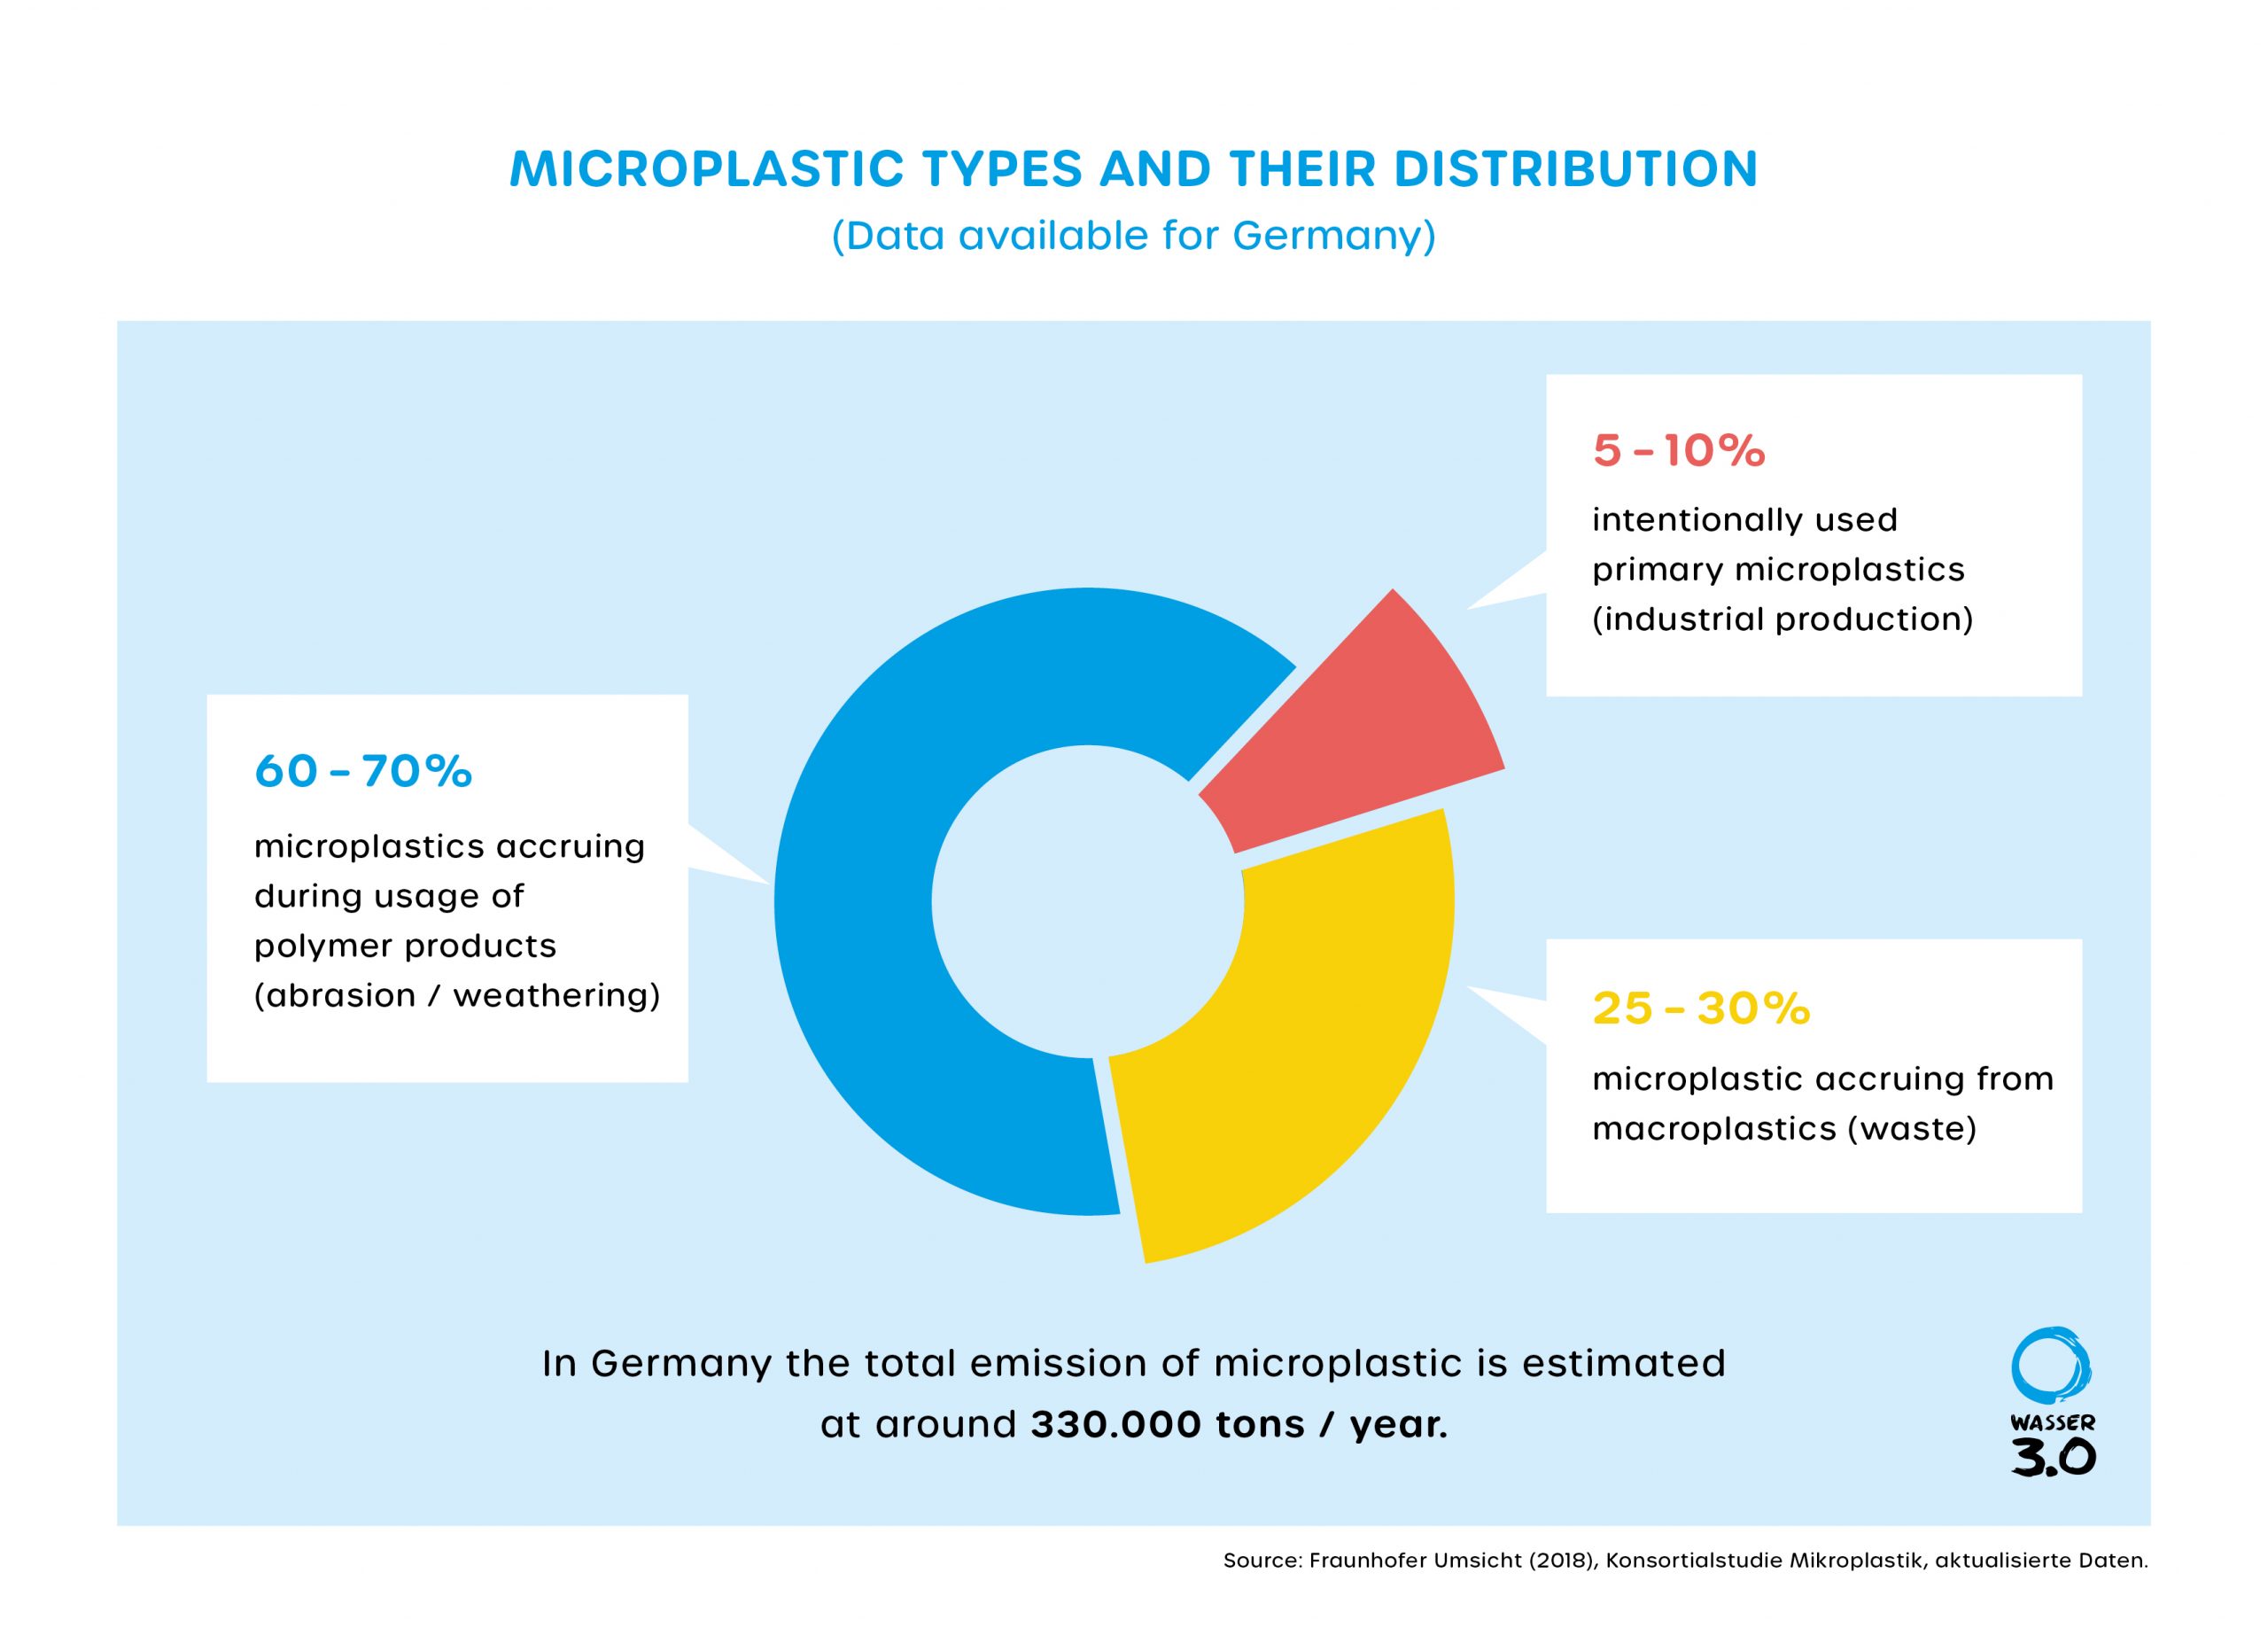 Microplastics - origin and types